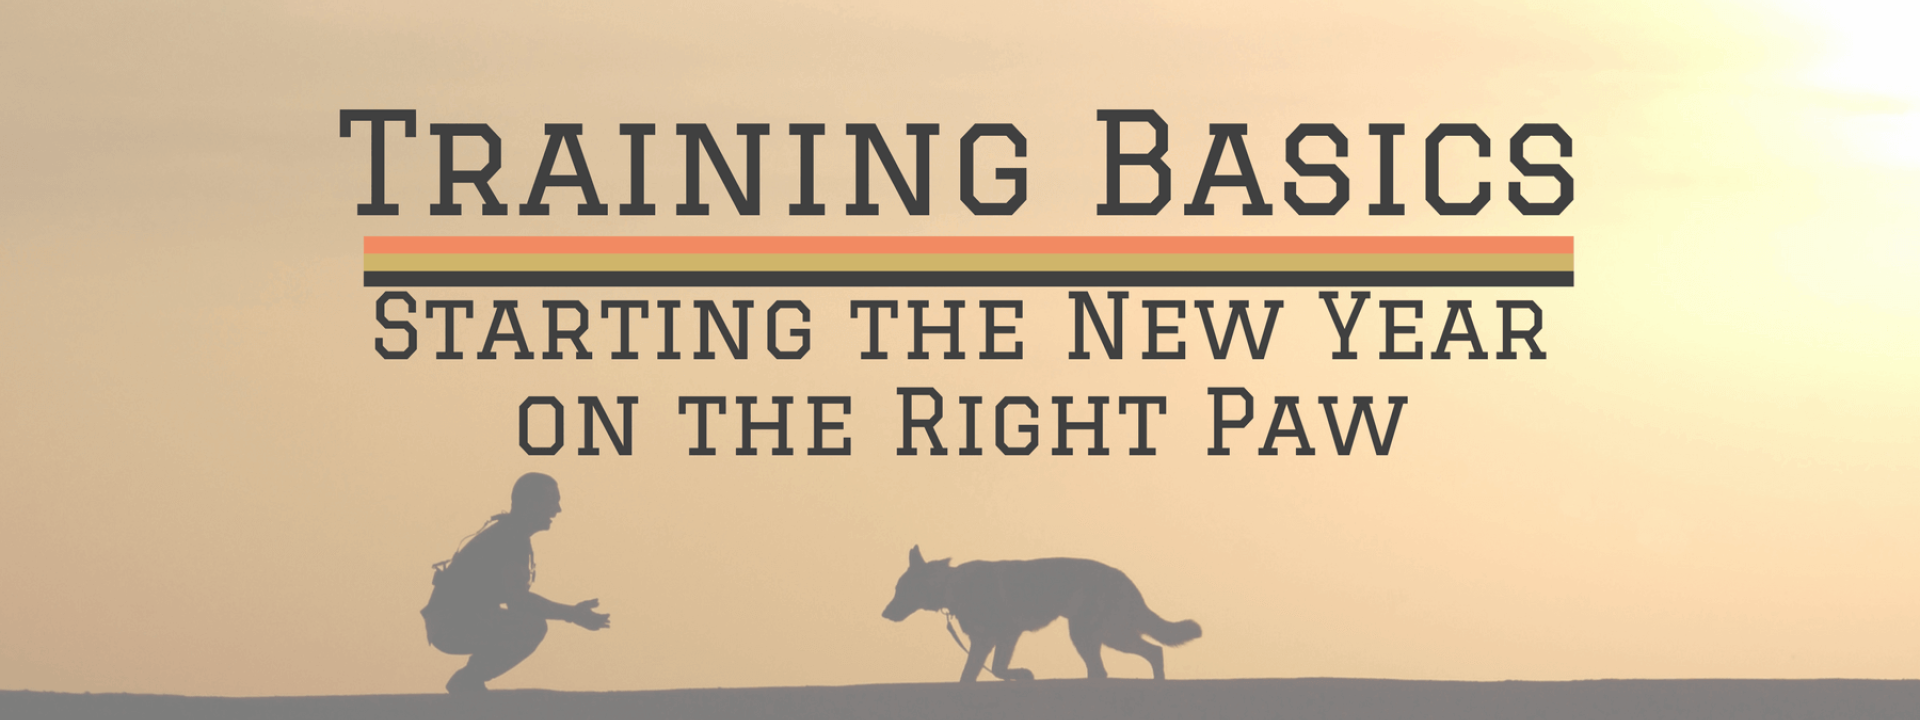 blog-title-training-basics.png